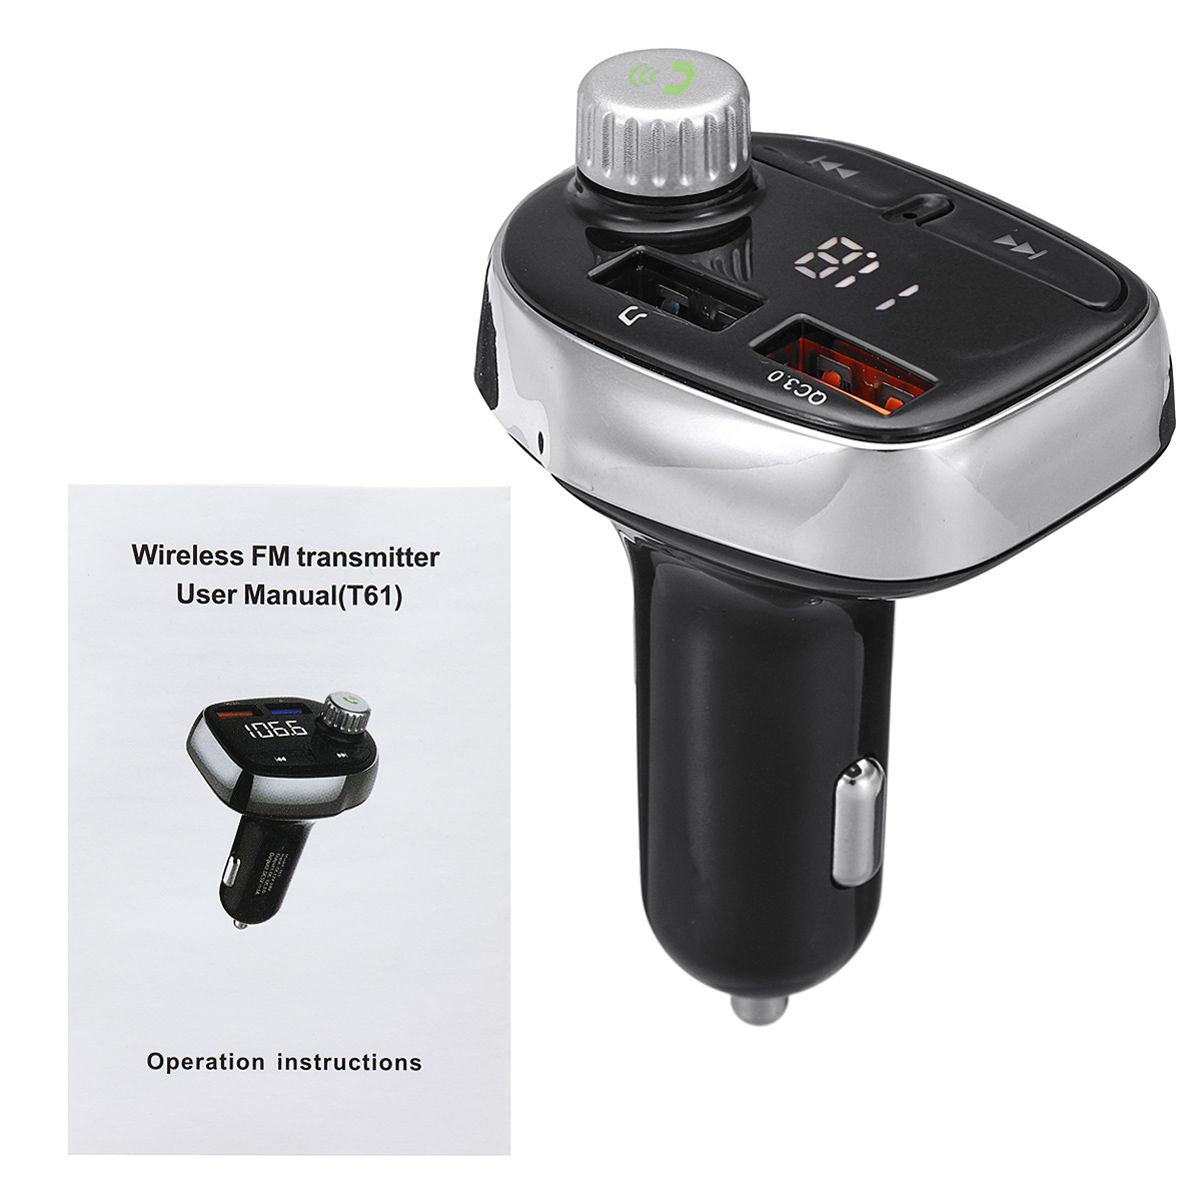 Wireless-Bluetooth-Car-MP3-Player-FM-Transmitter-Radio-LCD-SD-Dual-USB-Car-Charger-Kit-1546748